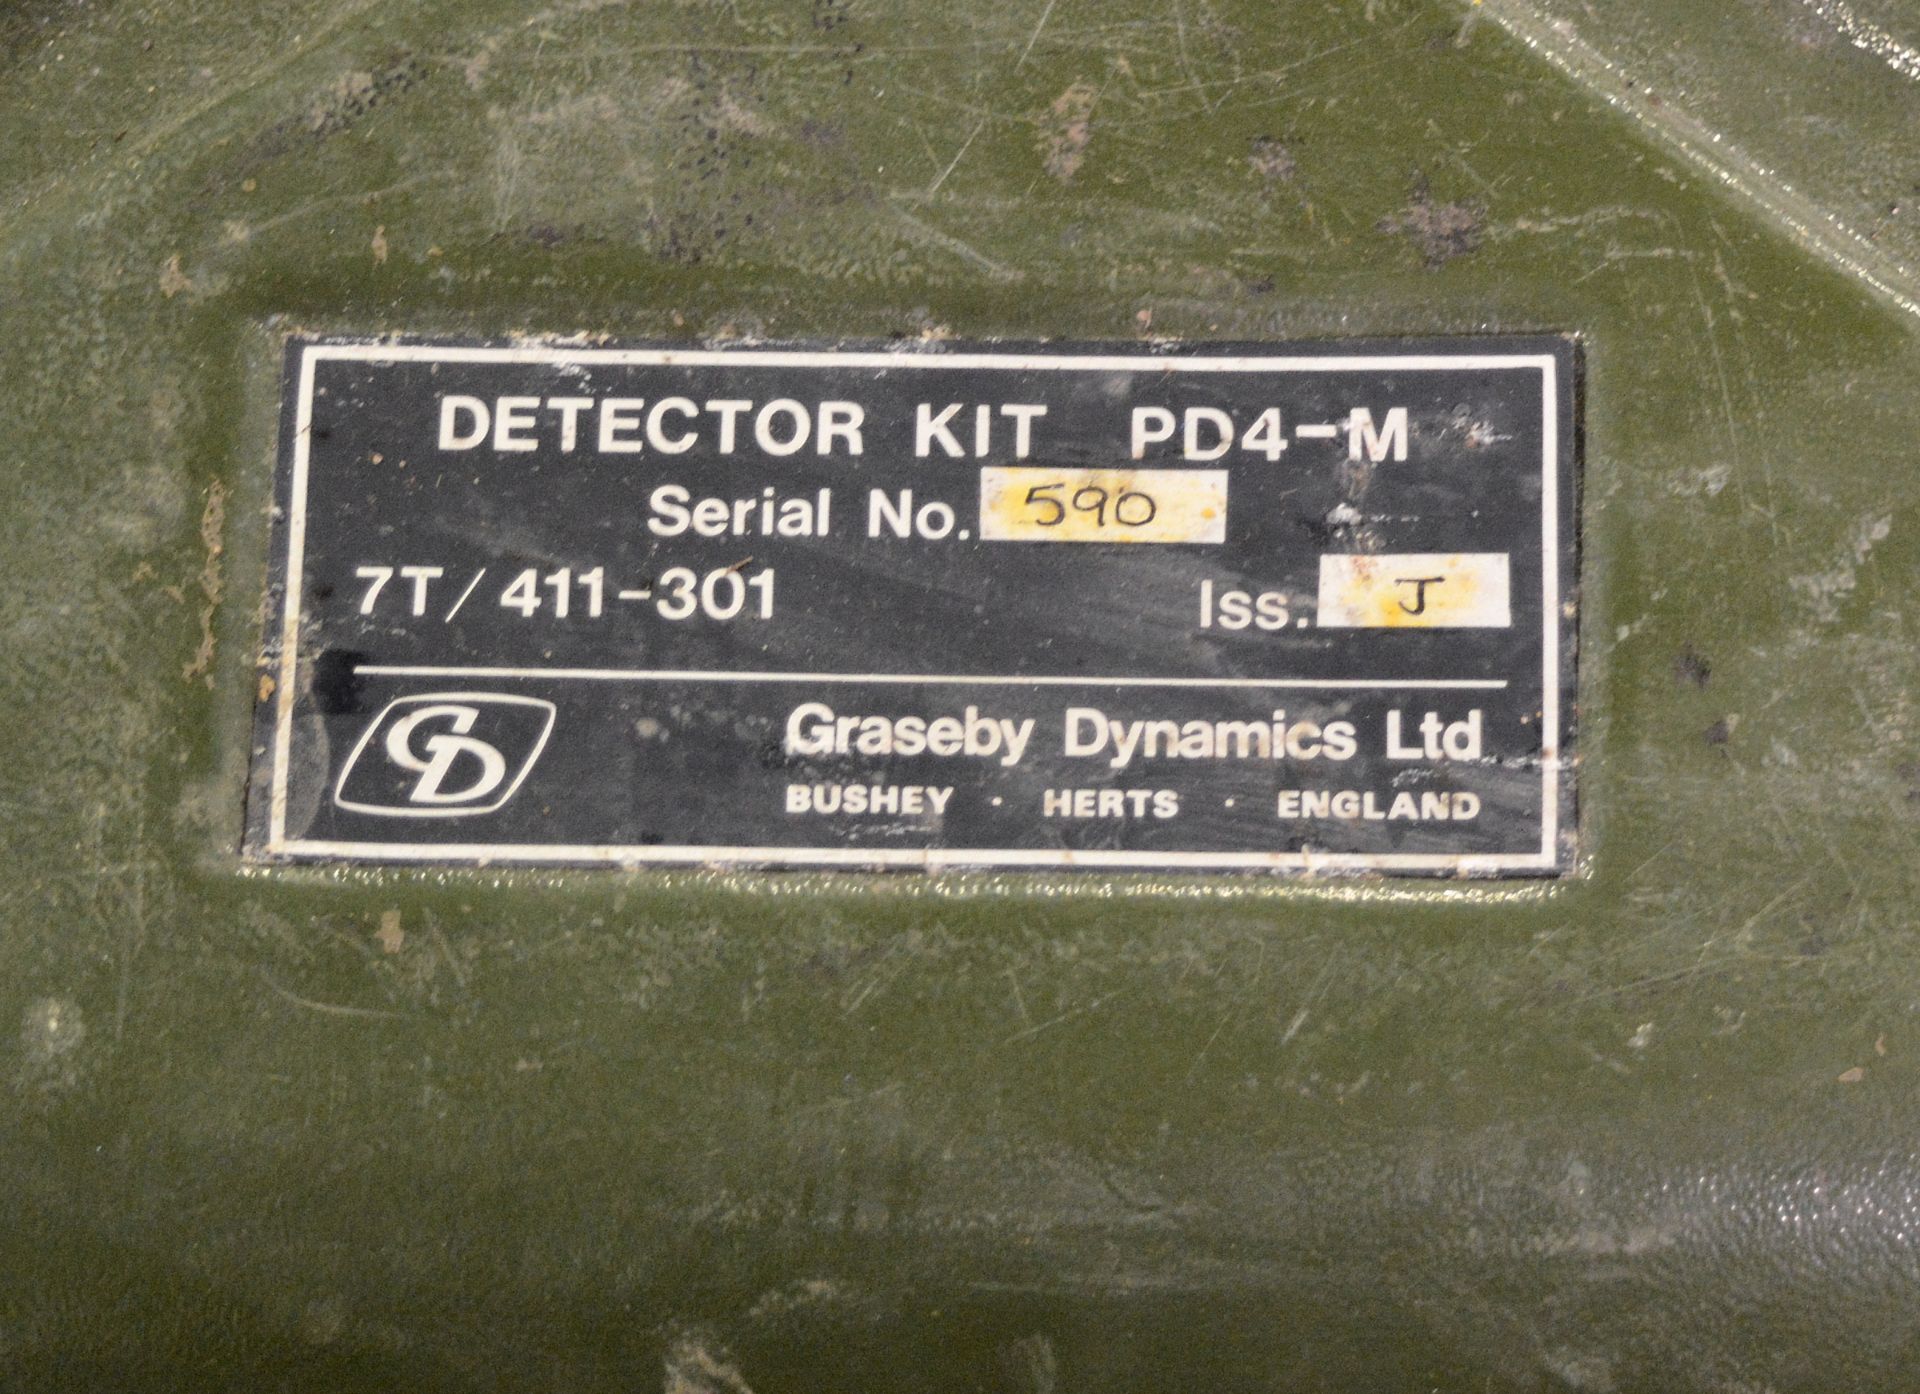 8x Greesby Dynamics Ltd Detector Kit PD4-M - Image 2 of 3